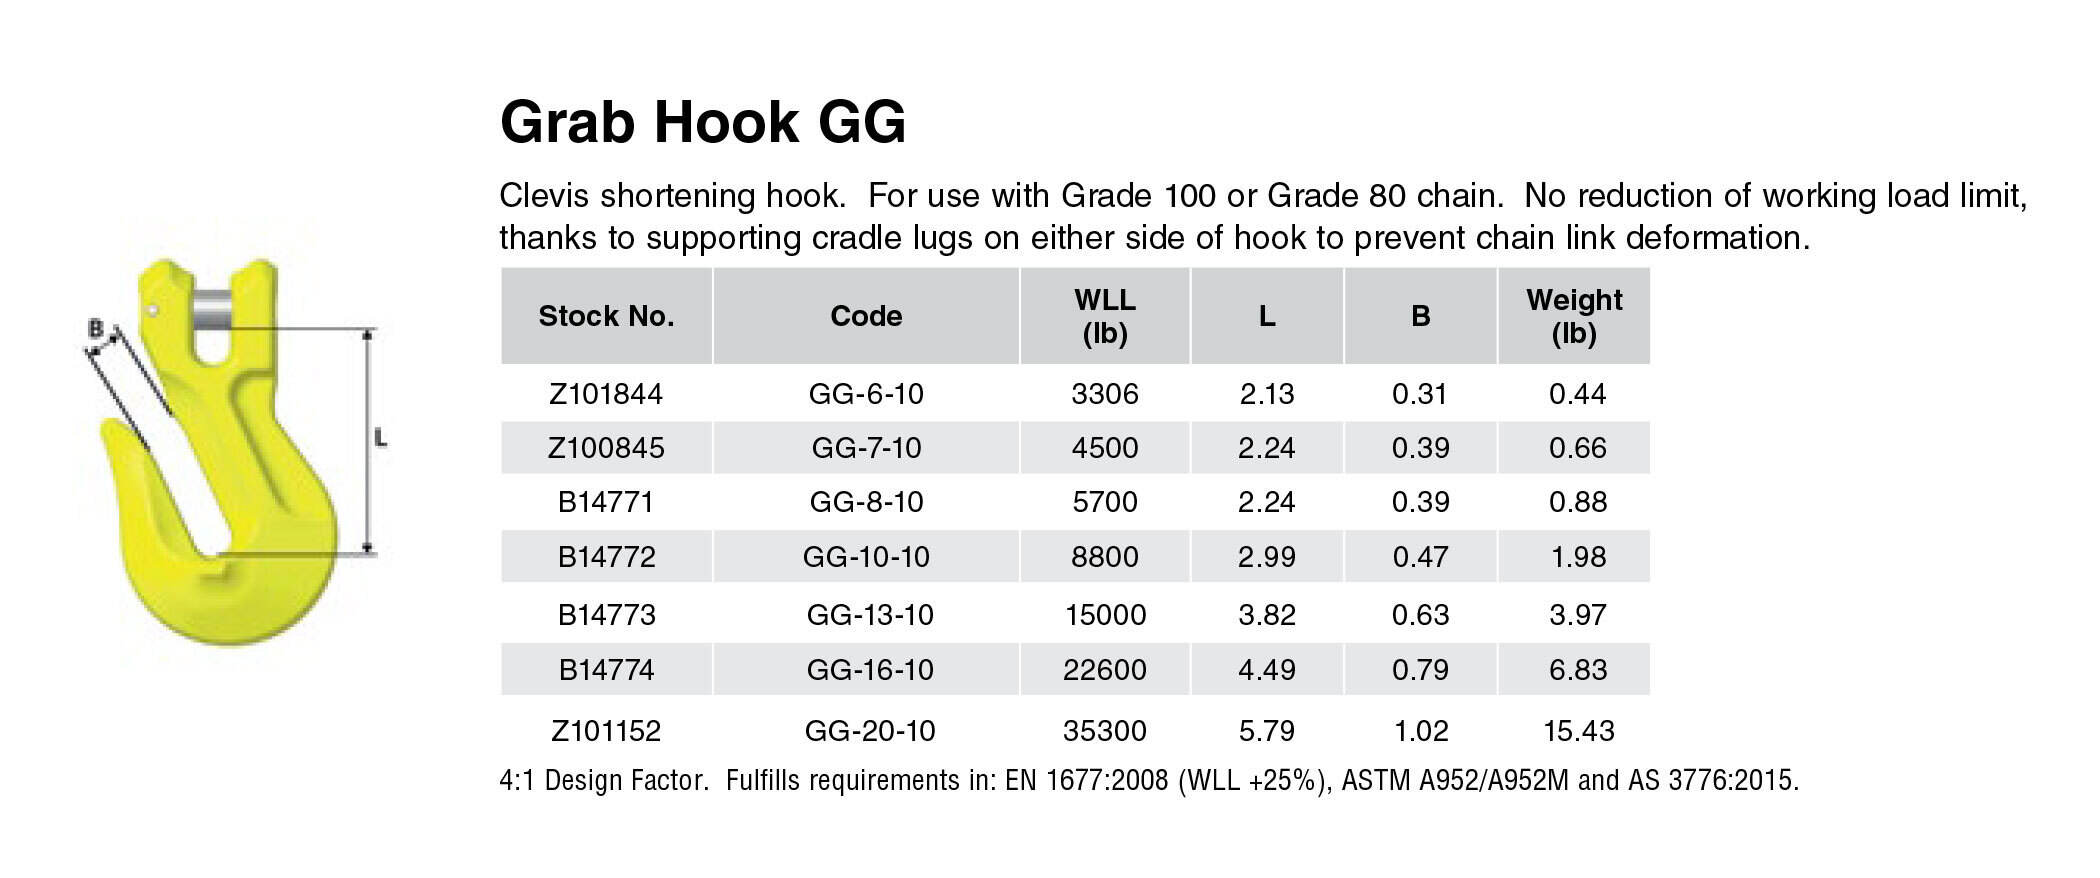 Gunnebo 3/8 GG-10-10 Grade 100 Clevis Grab Hook - 8800 lbs WLL